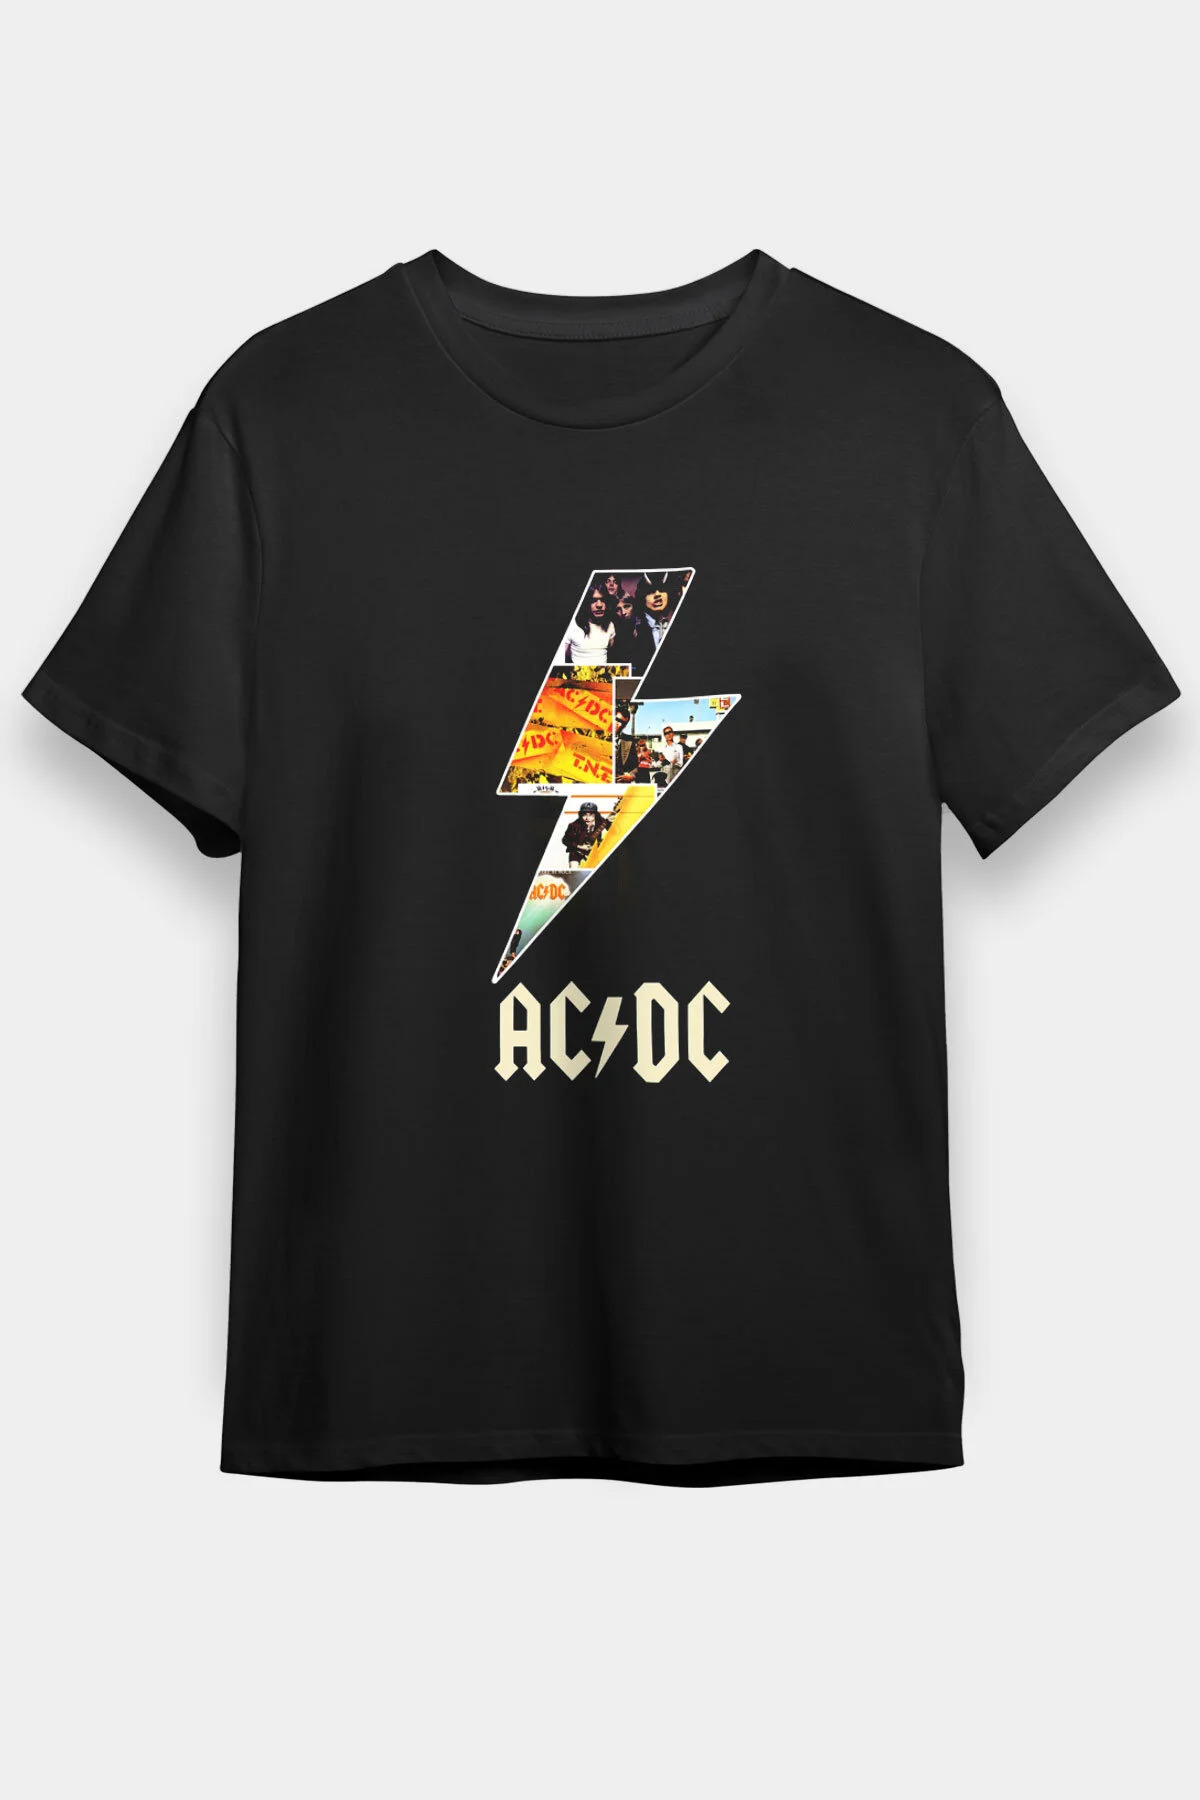 AC DC thunderbolt Unisex Tshirt 064  /